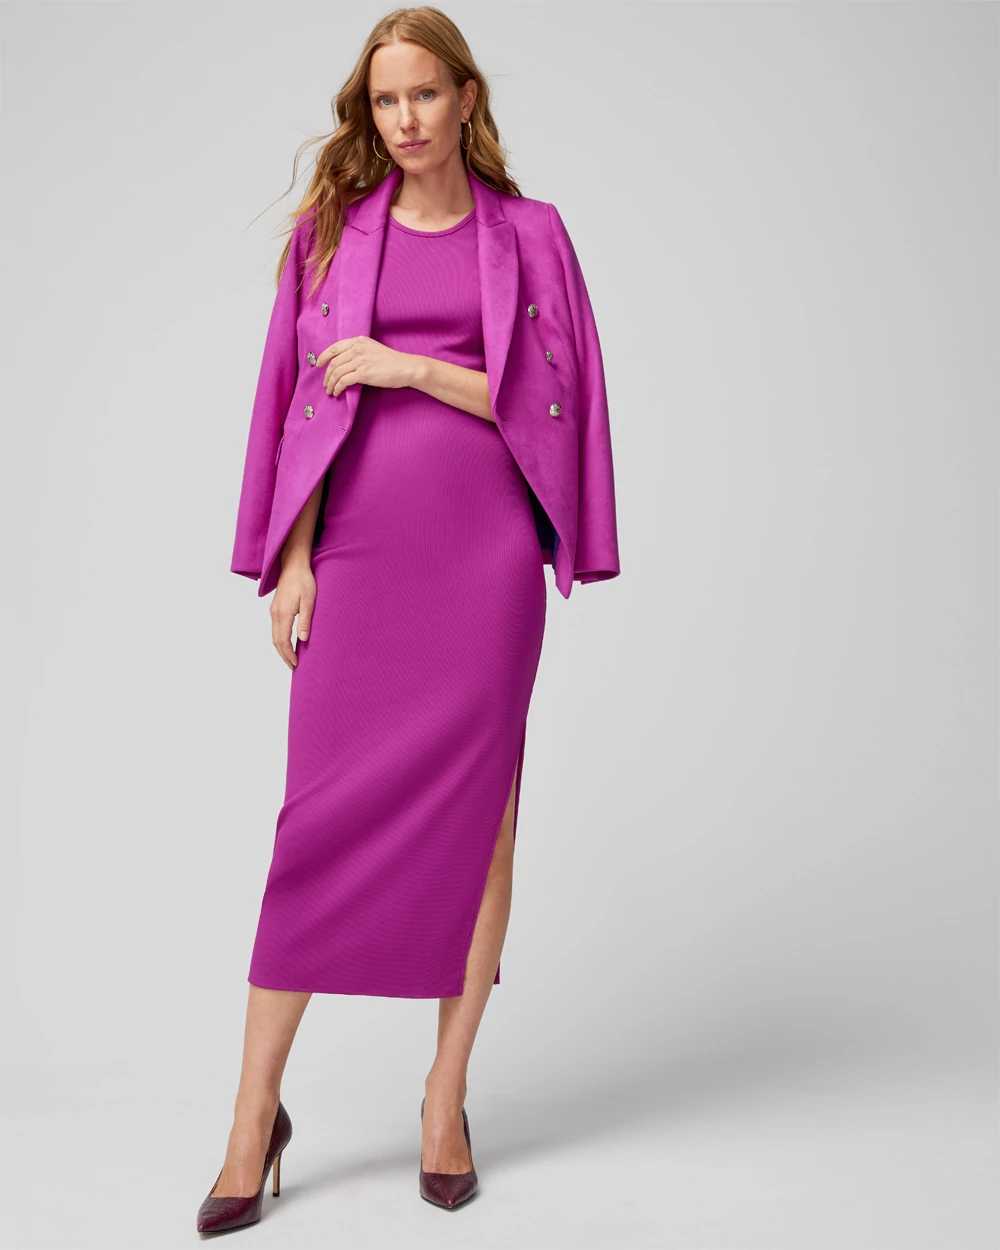 WHBM® FORME Rib Sleeveless Midi Dress click to view larger image.